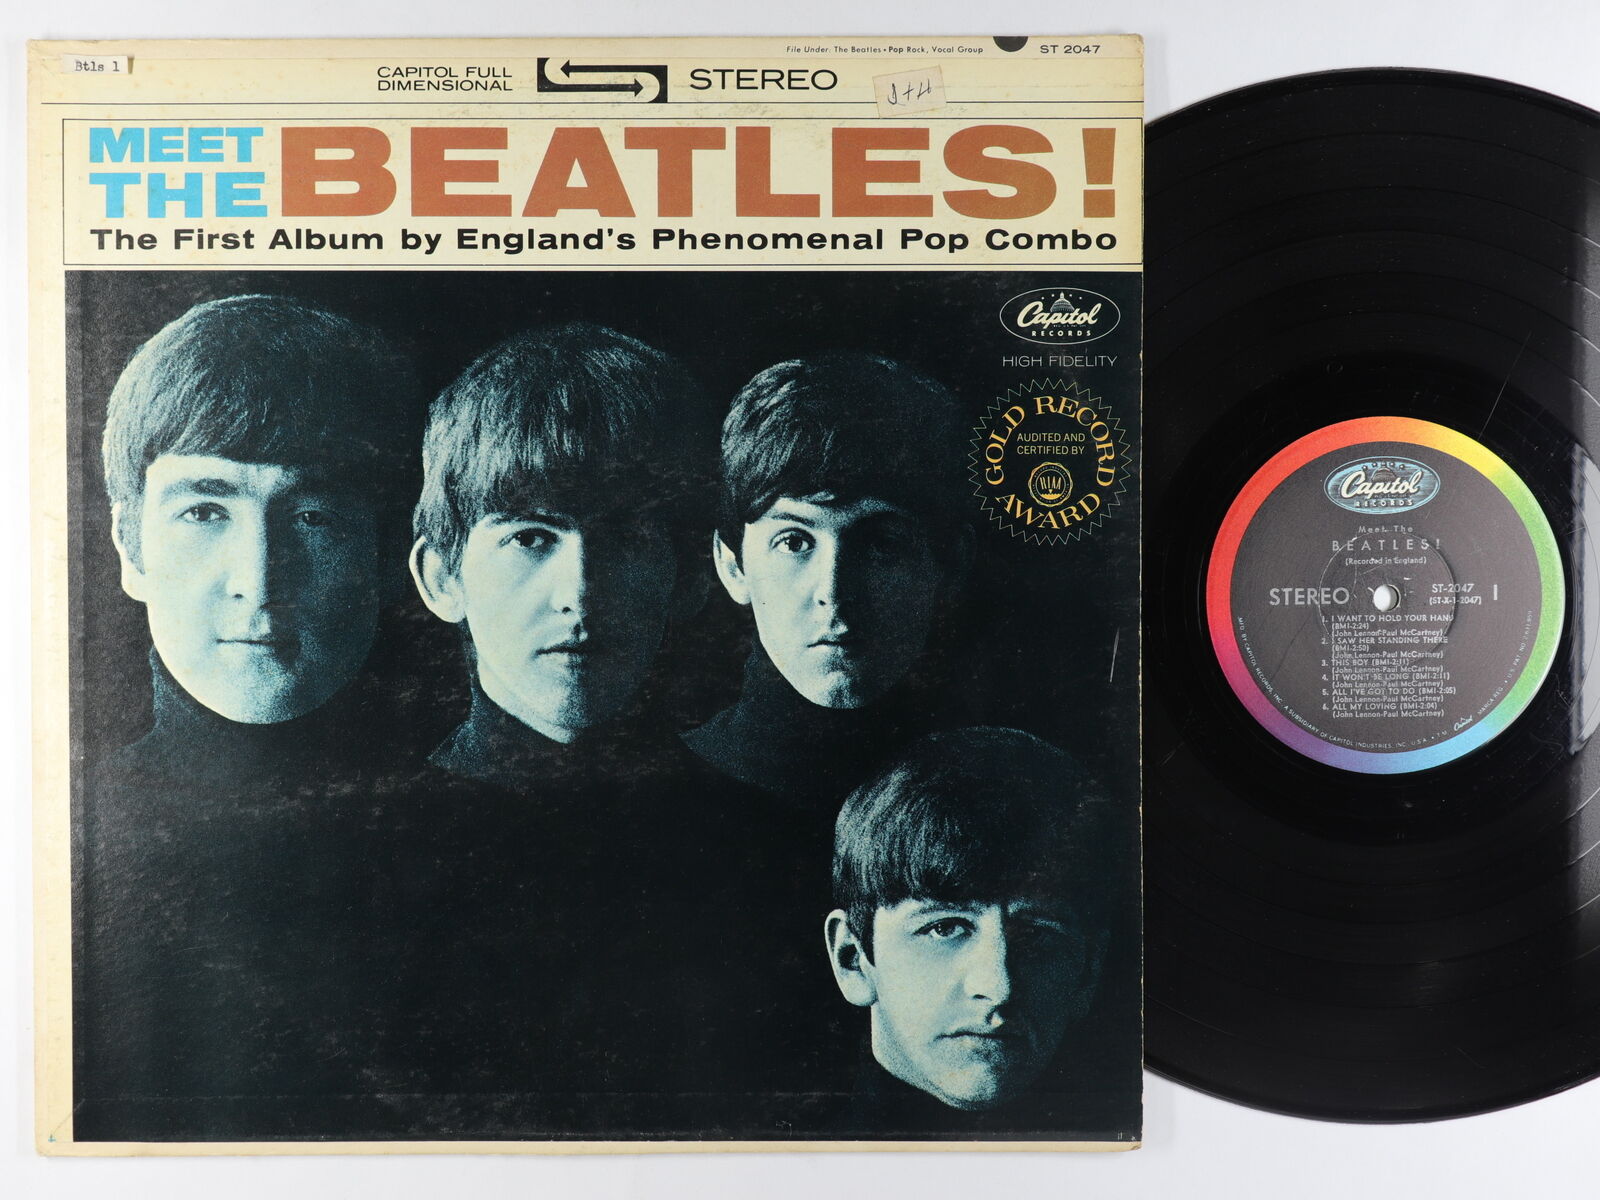 The Beatles - Meet the Beatles! - VG LP Record 1964 Capitol USA Mono Scranton Press Vinyl - Rock & Roll / Beat